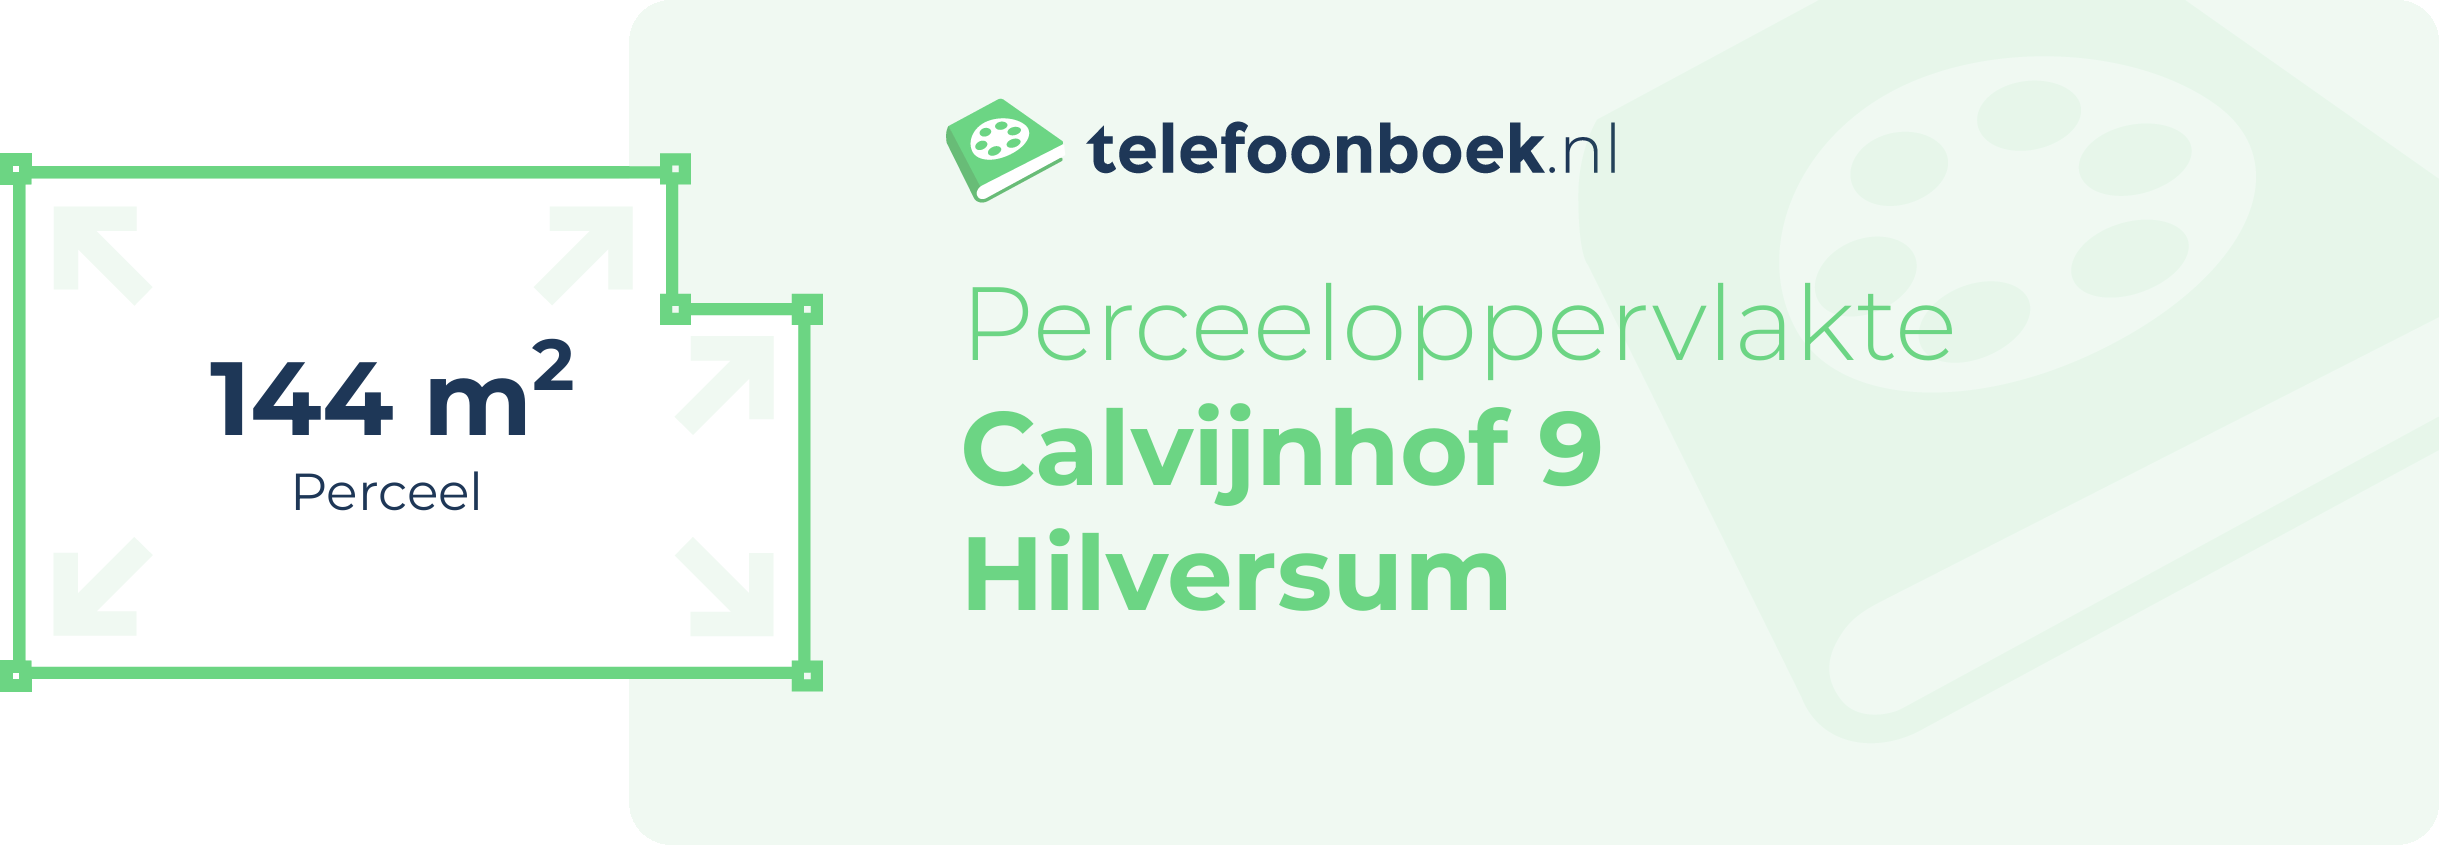 Perceeloppervlakte Calvijnhof 9 Hilversum